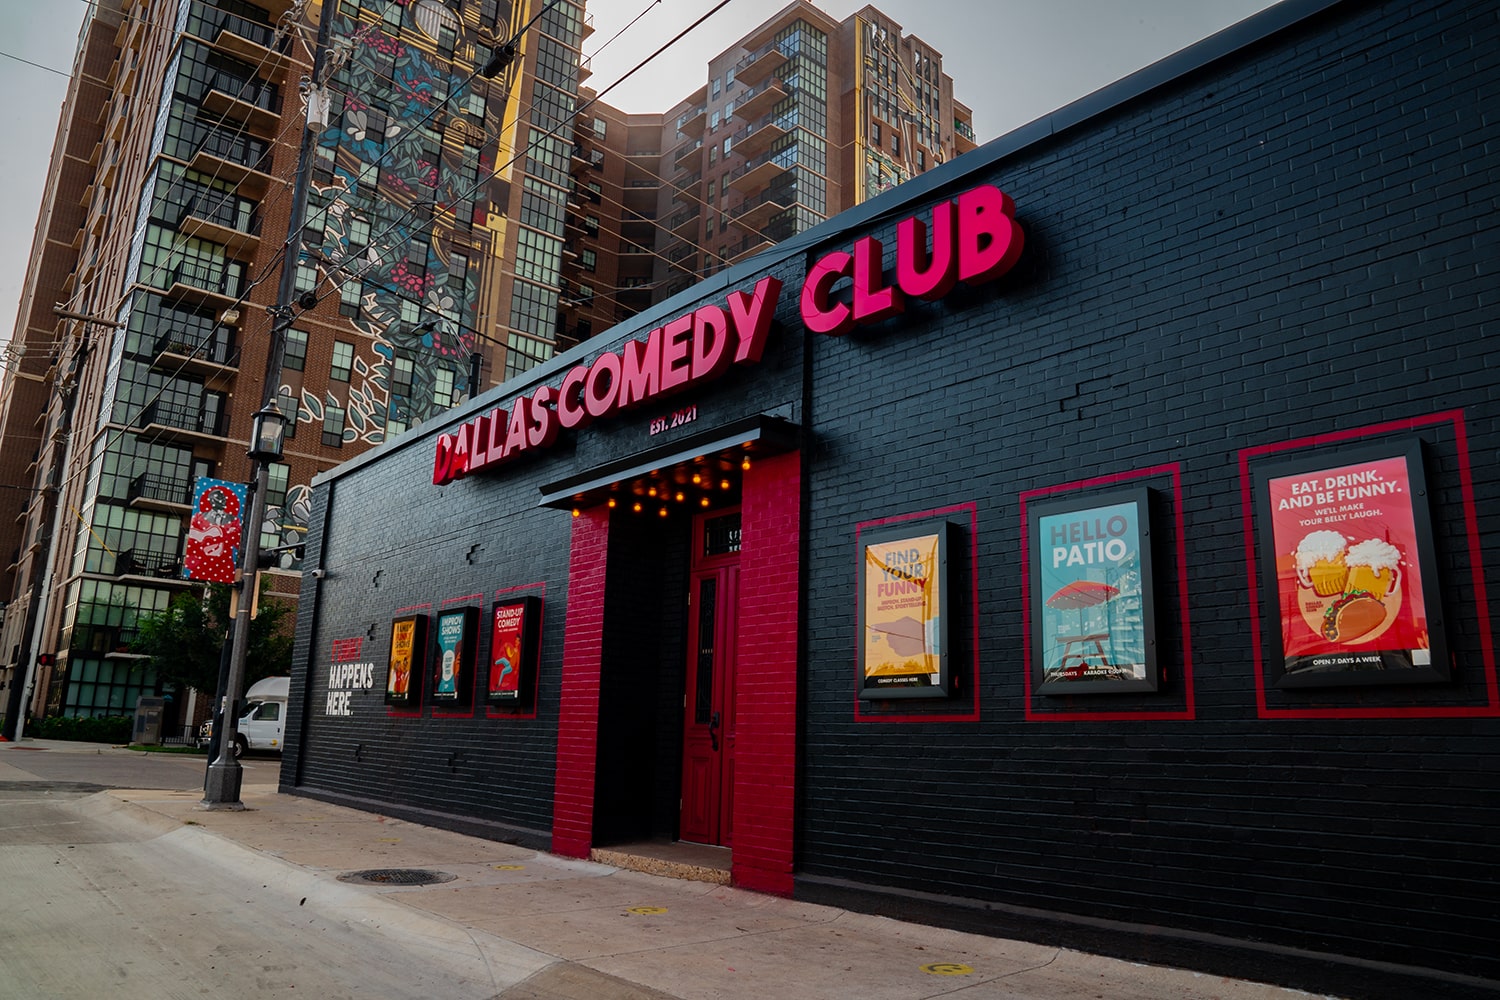 Dallas Comedy Club Exterior 1